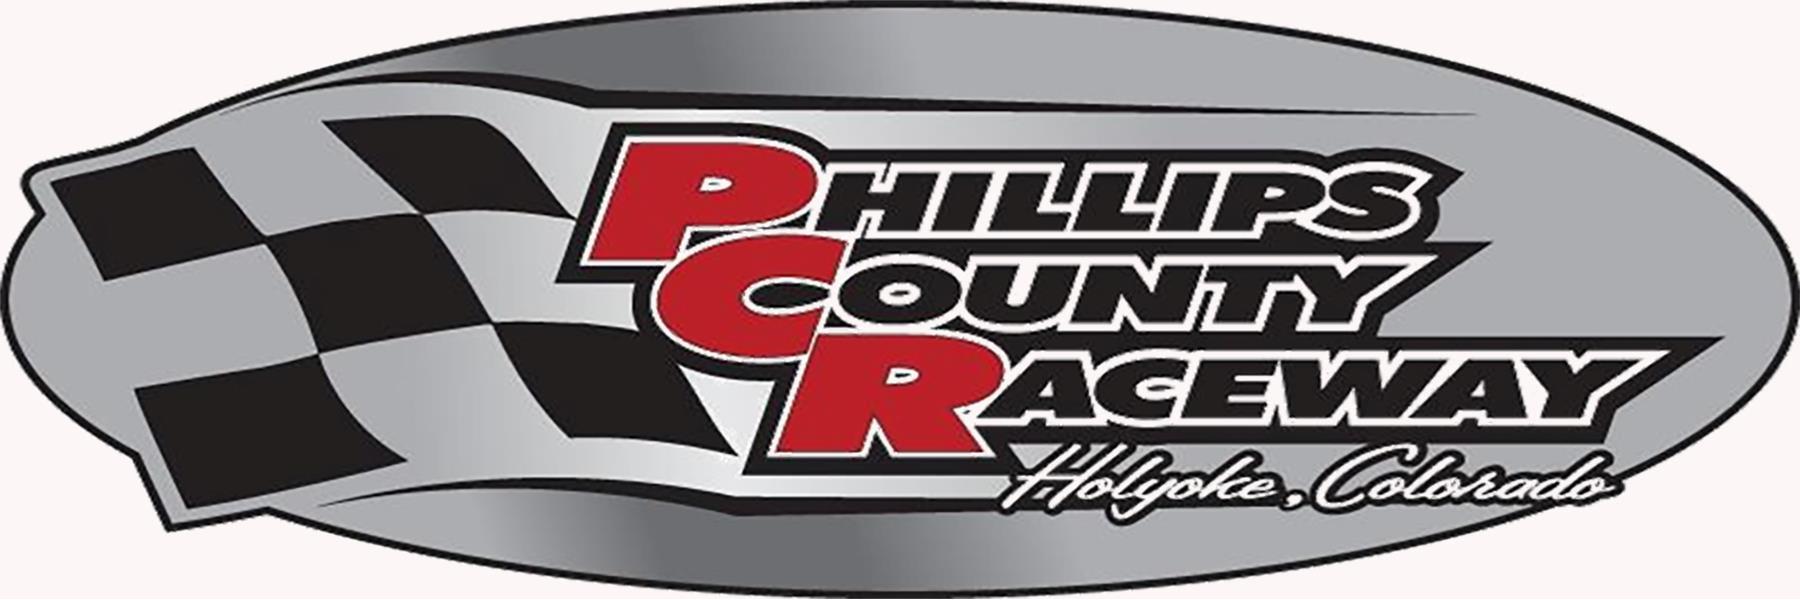 7/2/2021 - Phillips County Raceway